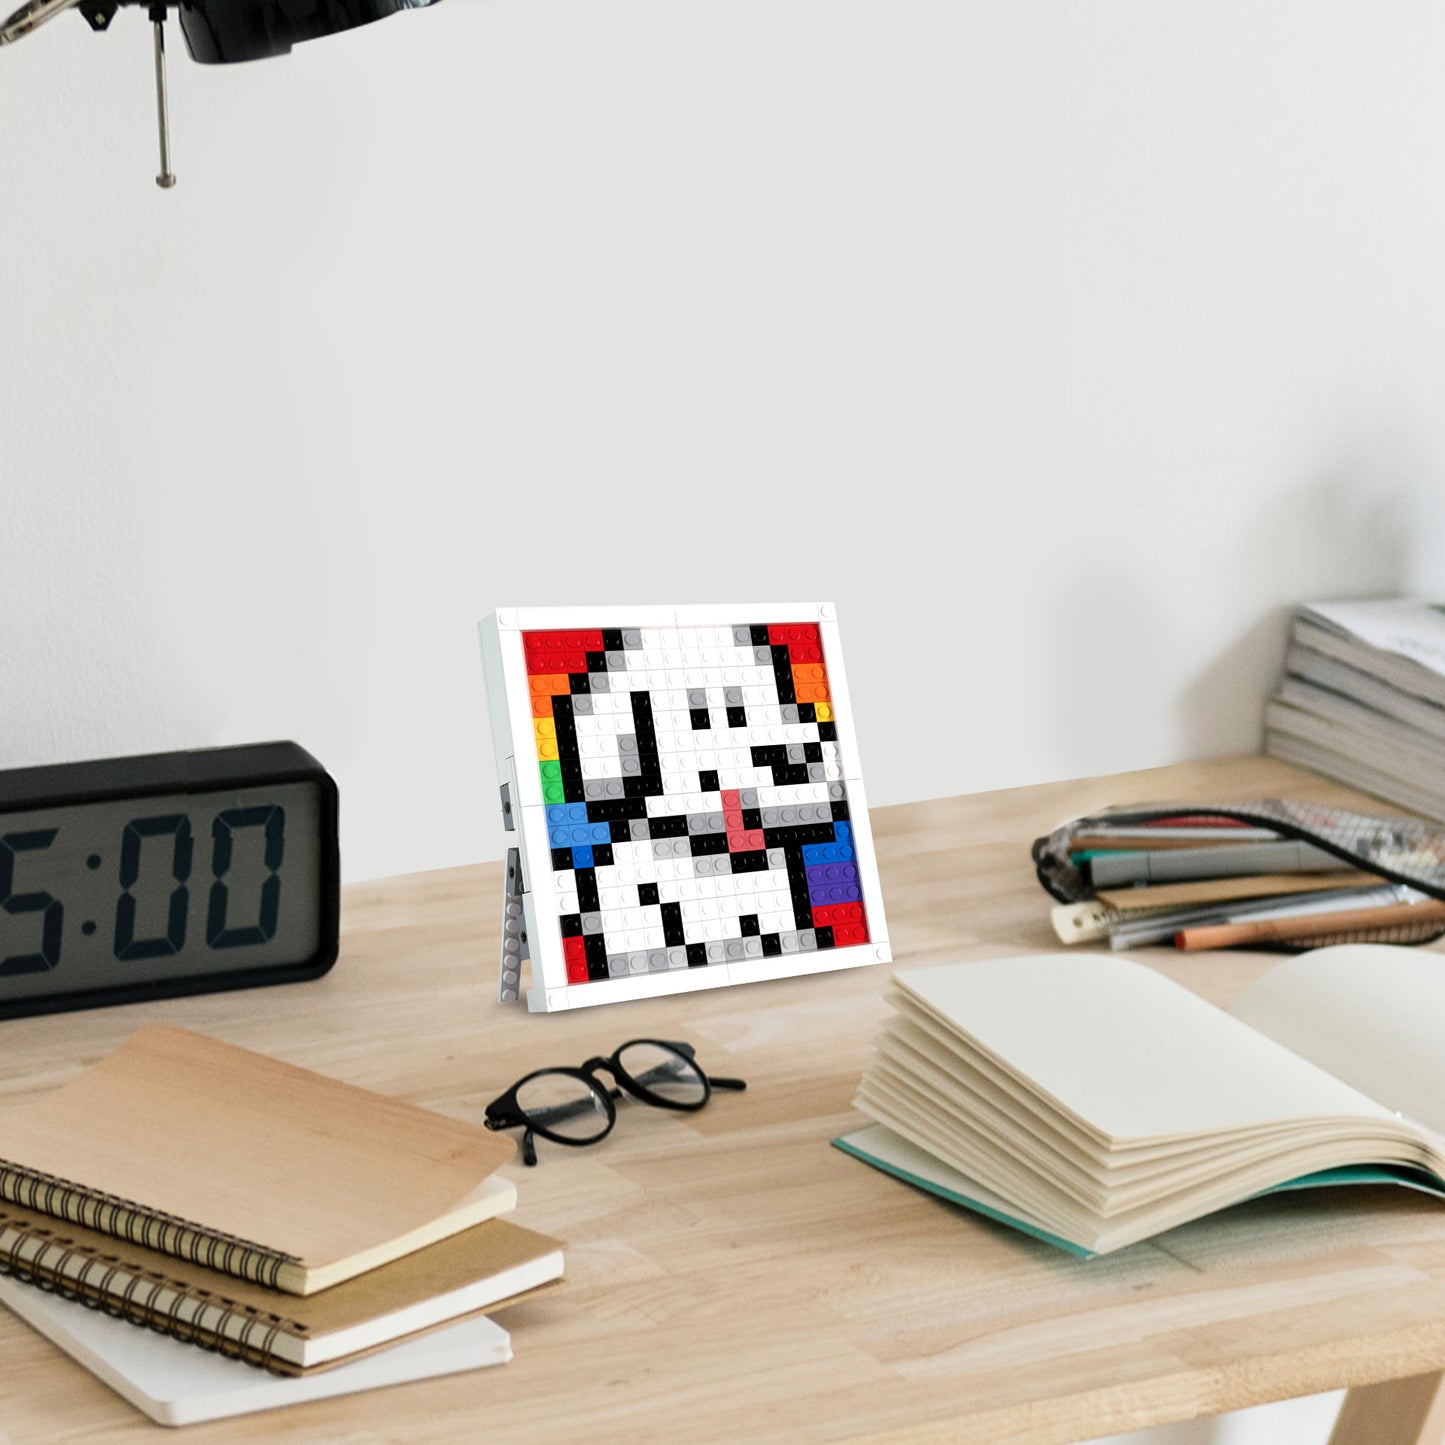 Pixel Art of Dogs Compatible Lego Set - A Minimalist Pet-themed Decoration